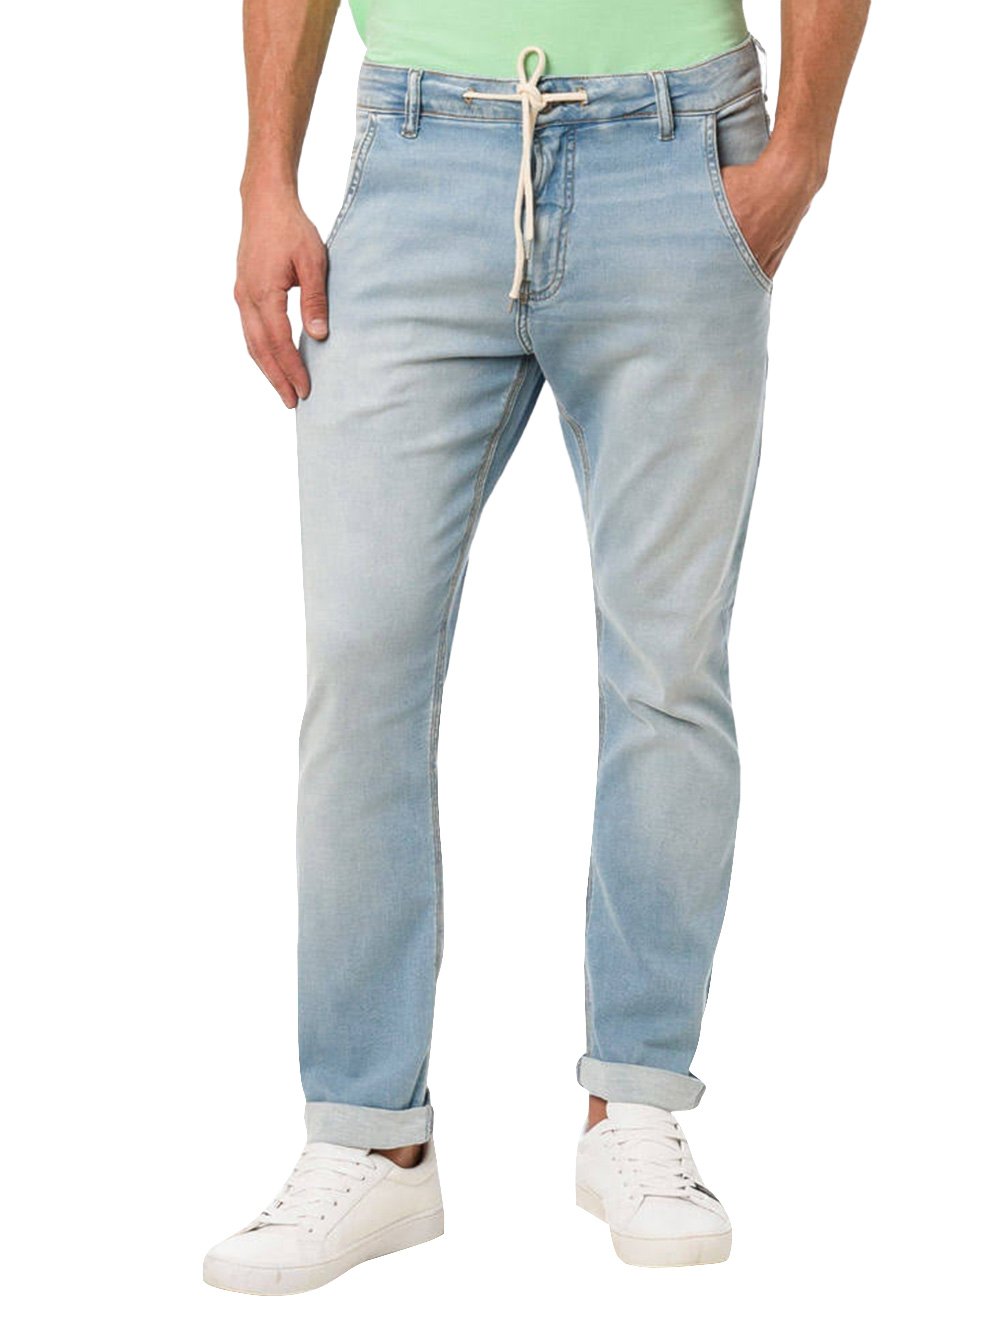 Calça Masculina Jeans New Basic Polo Wear Jeans Claro